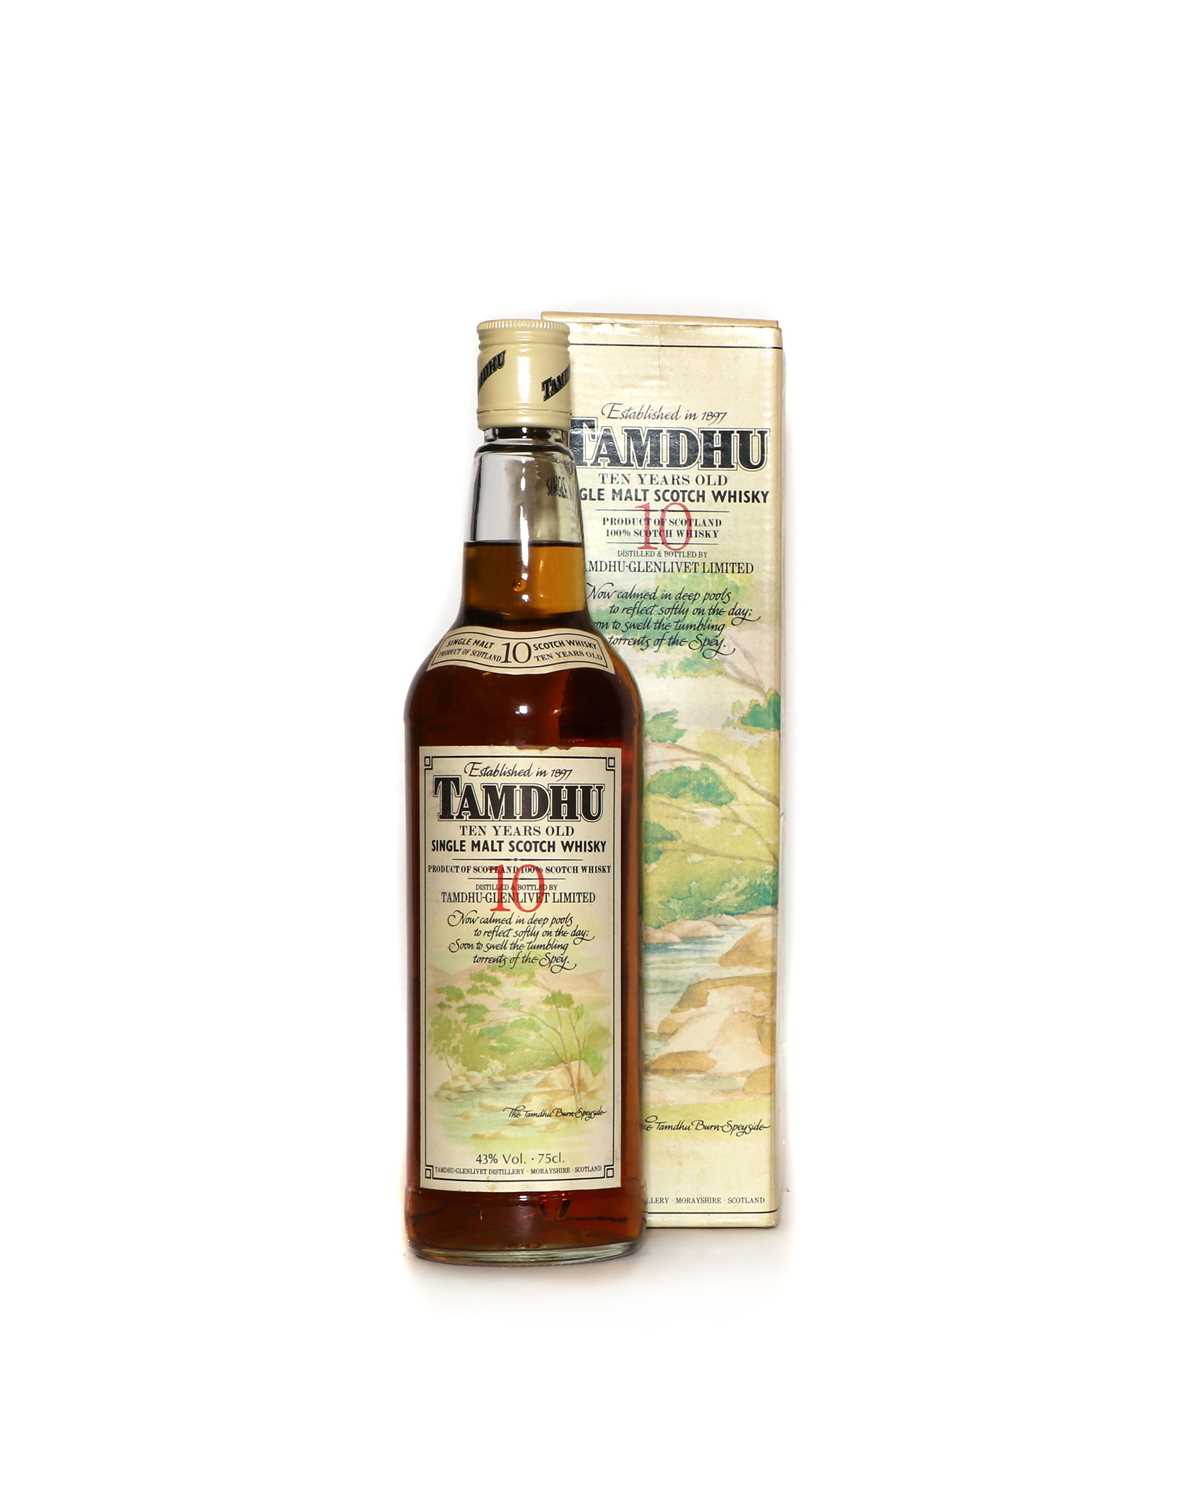 Tamdhu, Single Malt Scotch Whisky, 10 Years Old, 1980s bottling, 43% vol, 75cl, one bottle (boxed)